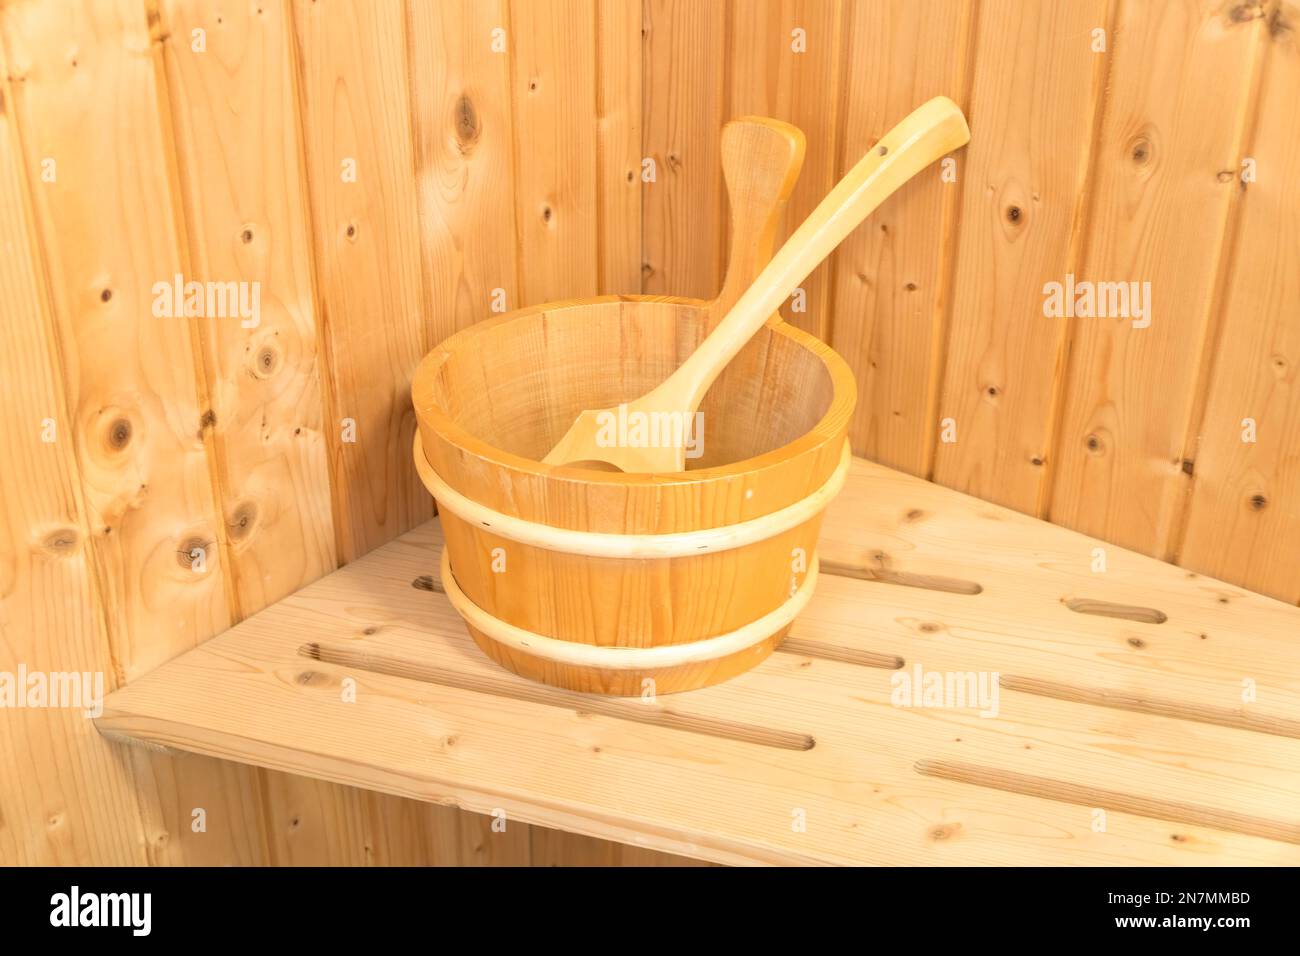 Interior de la sauna finlandesa. Sauna de madera clásica. Baño